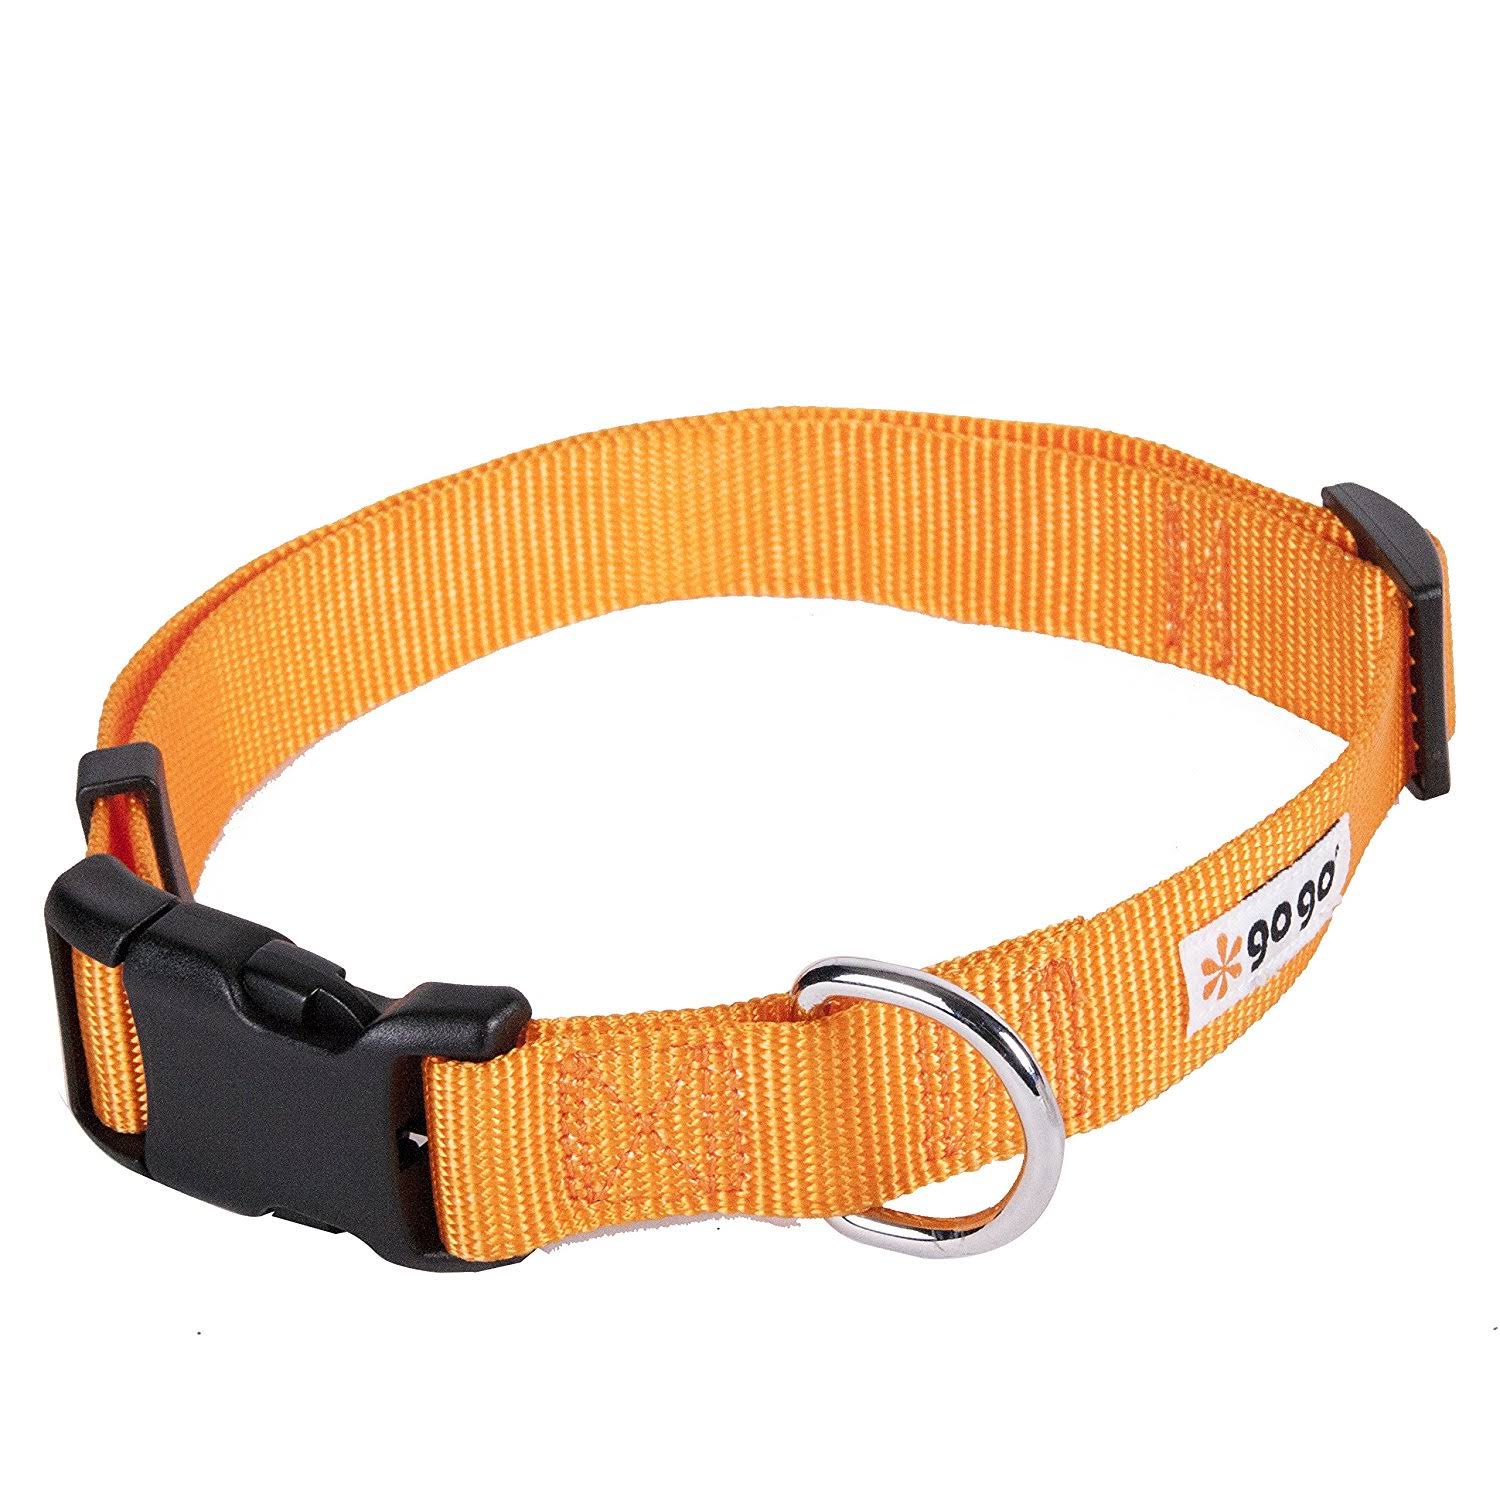 GoGo Pet Products Dog Collar - Nylon, Medium, Orange